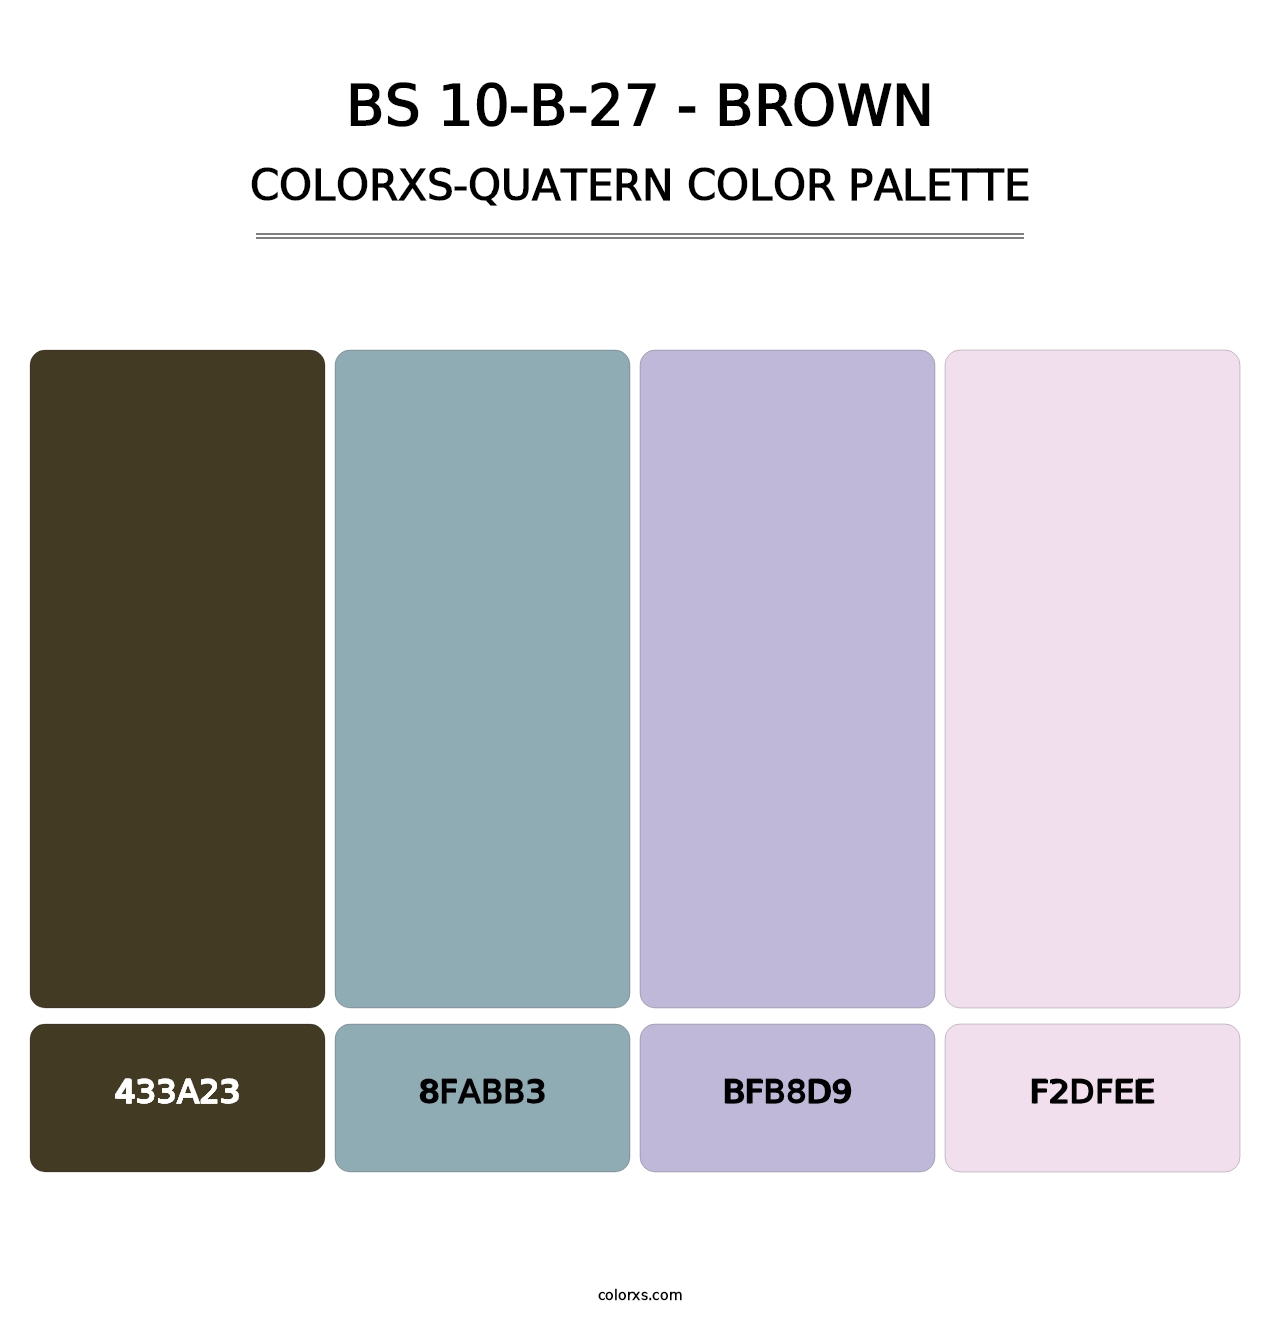 BS 10-B-27 - Brown - Colorxs Quatern Palette